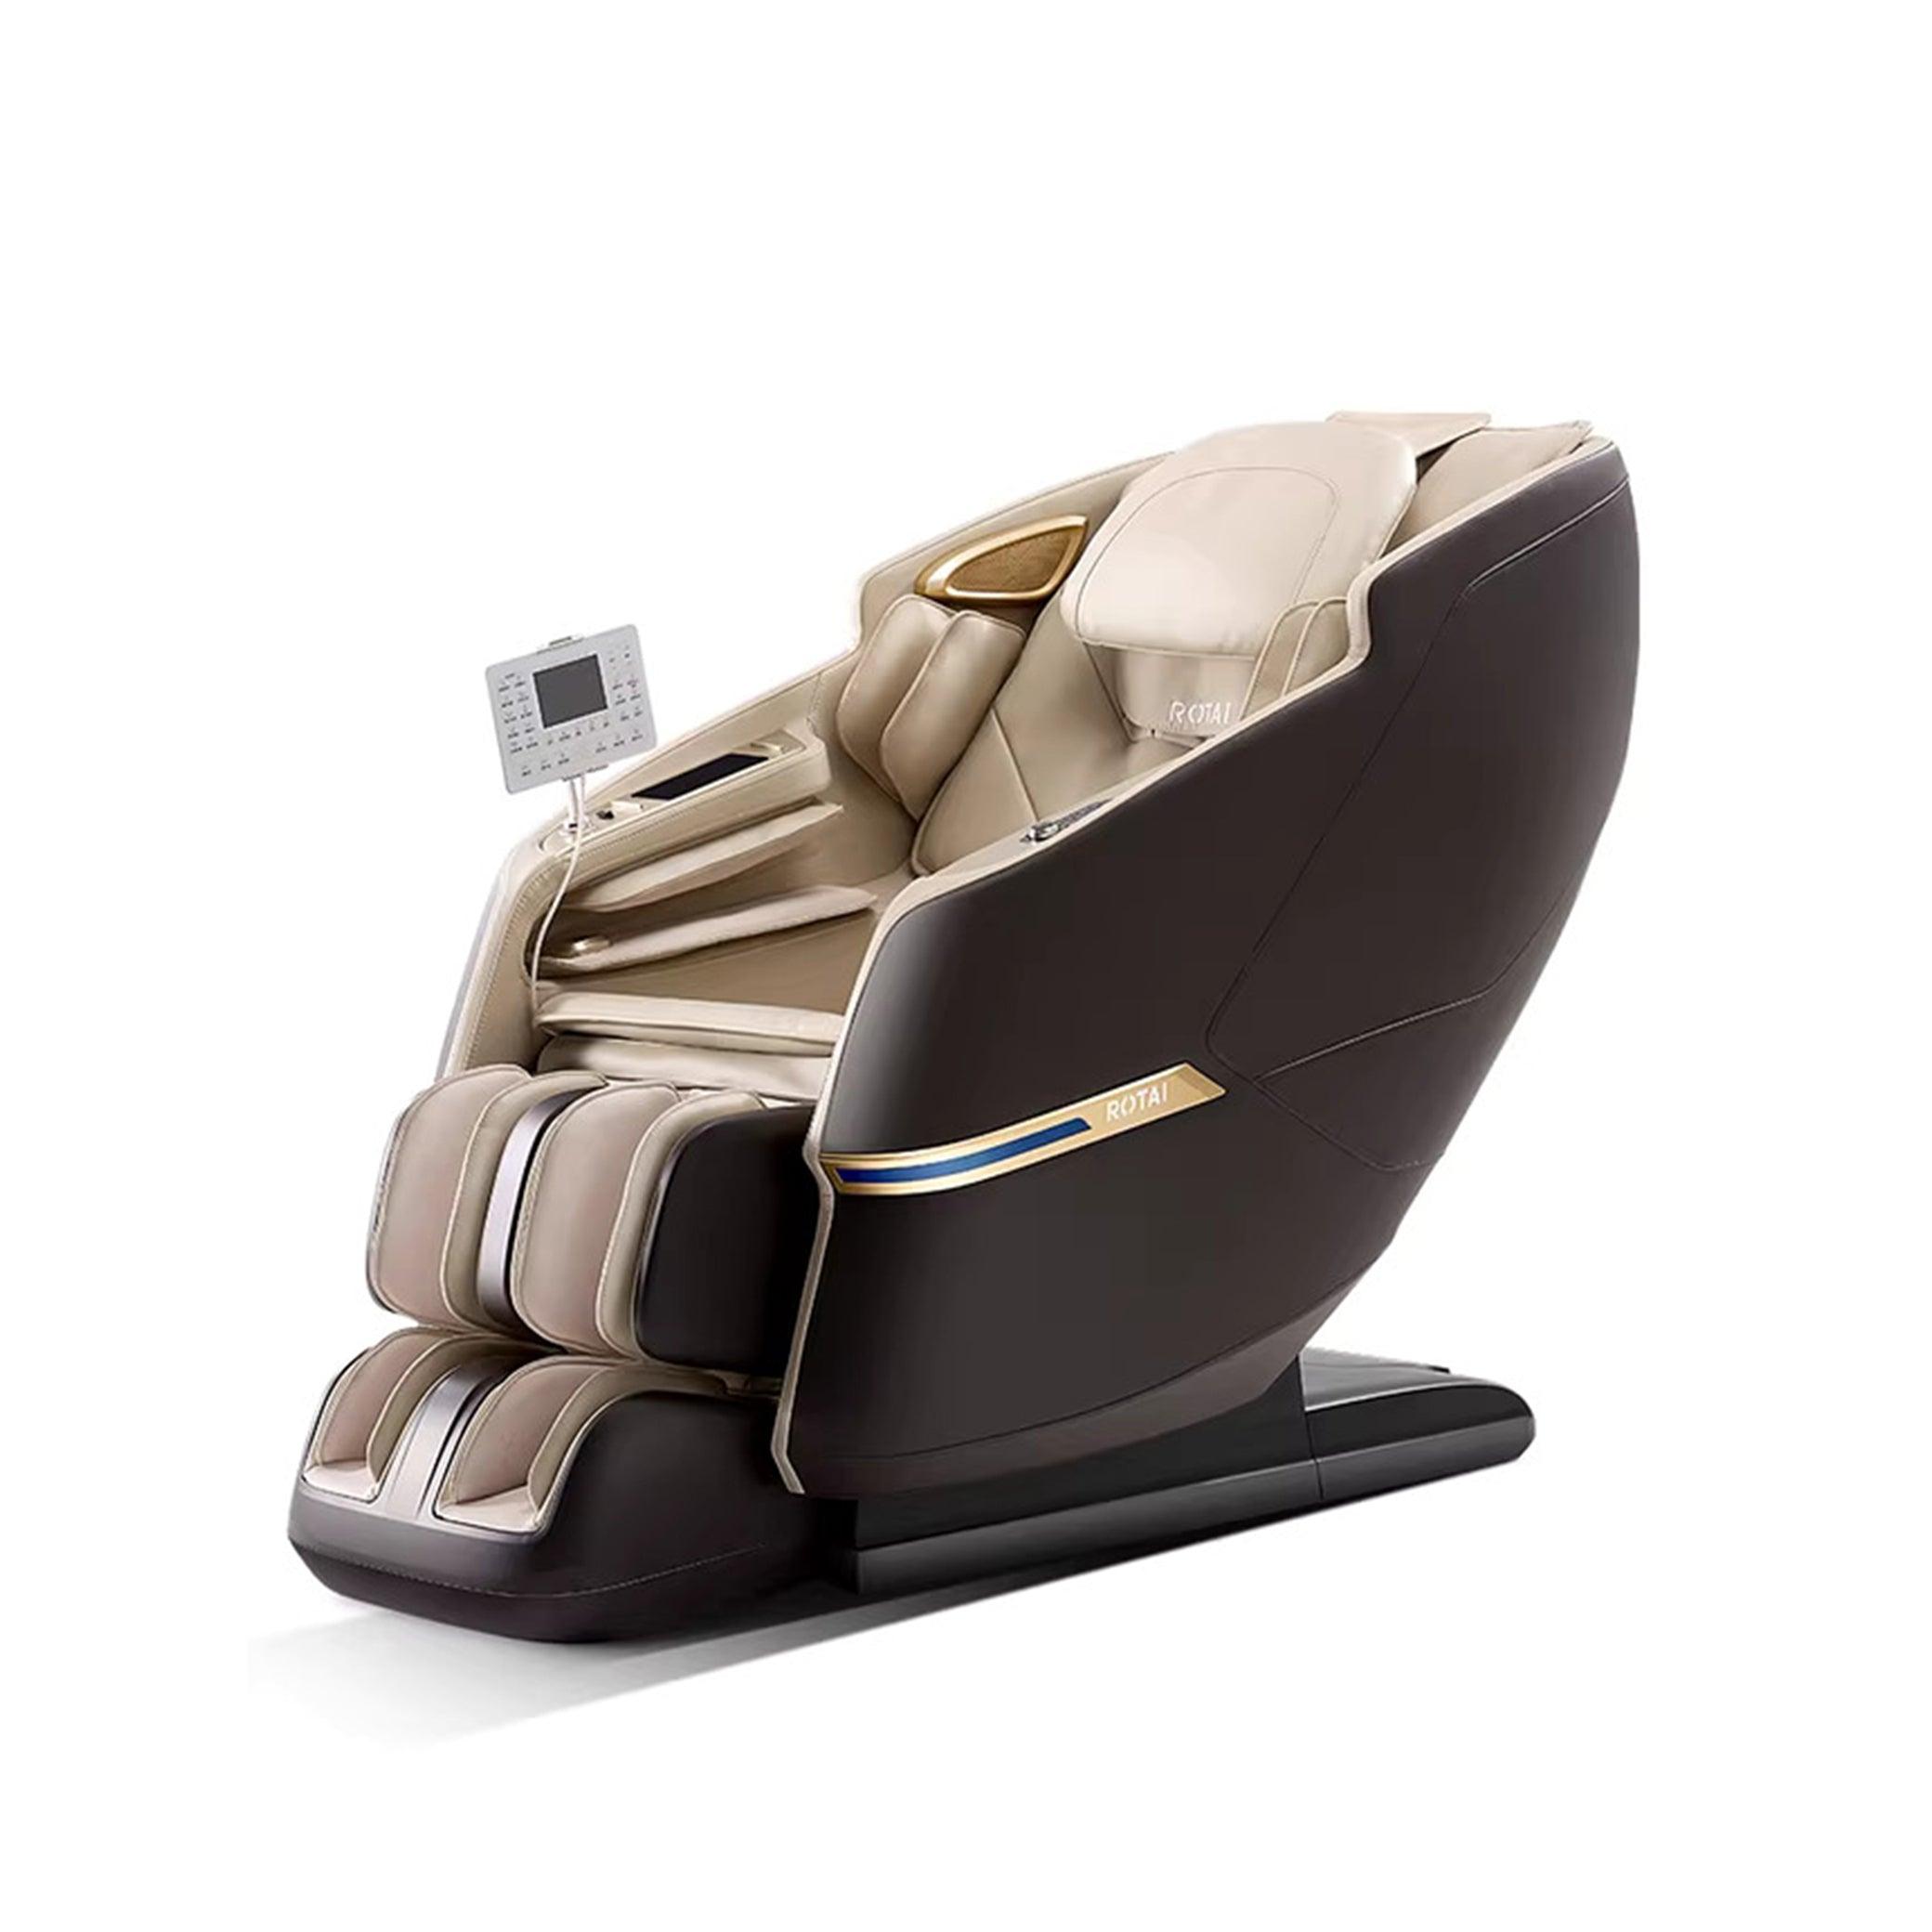 Royal Magestic Pro Massage Chair (Brown) with 3D Movement and AI Smart Massage technology - best massage chair in UAE and Dubai. best massage chair uae, massage chair Dubai, massage chair uae, massage chair Saudi Arabia, كرسي التدليك, Best massage chair i